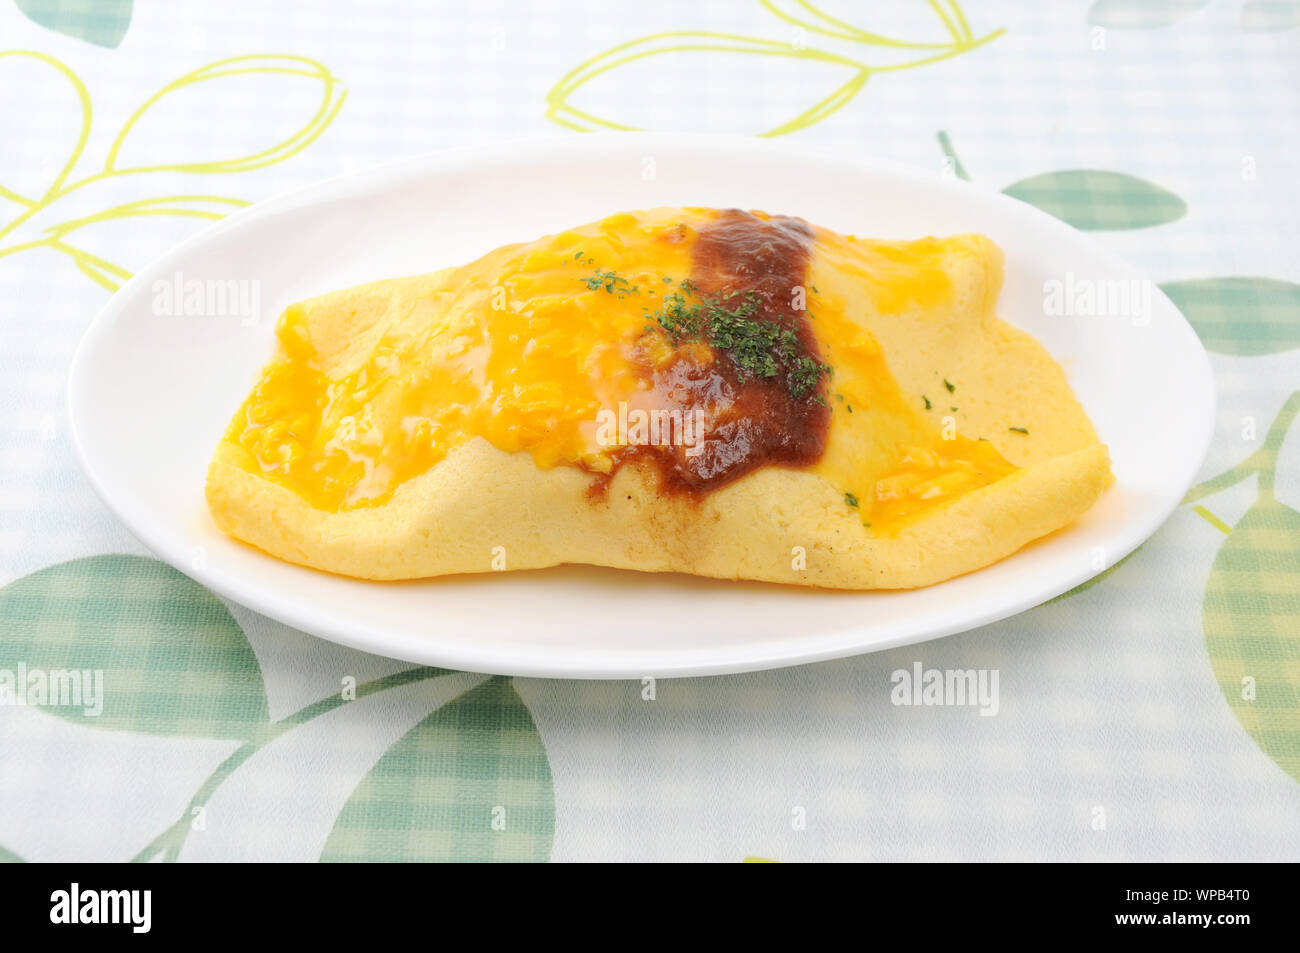 omuraisu omu rice omelet japanese food on plate isolated on table Stock Photo